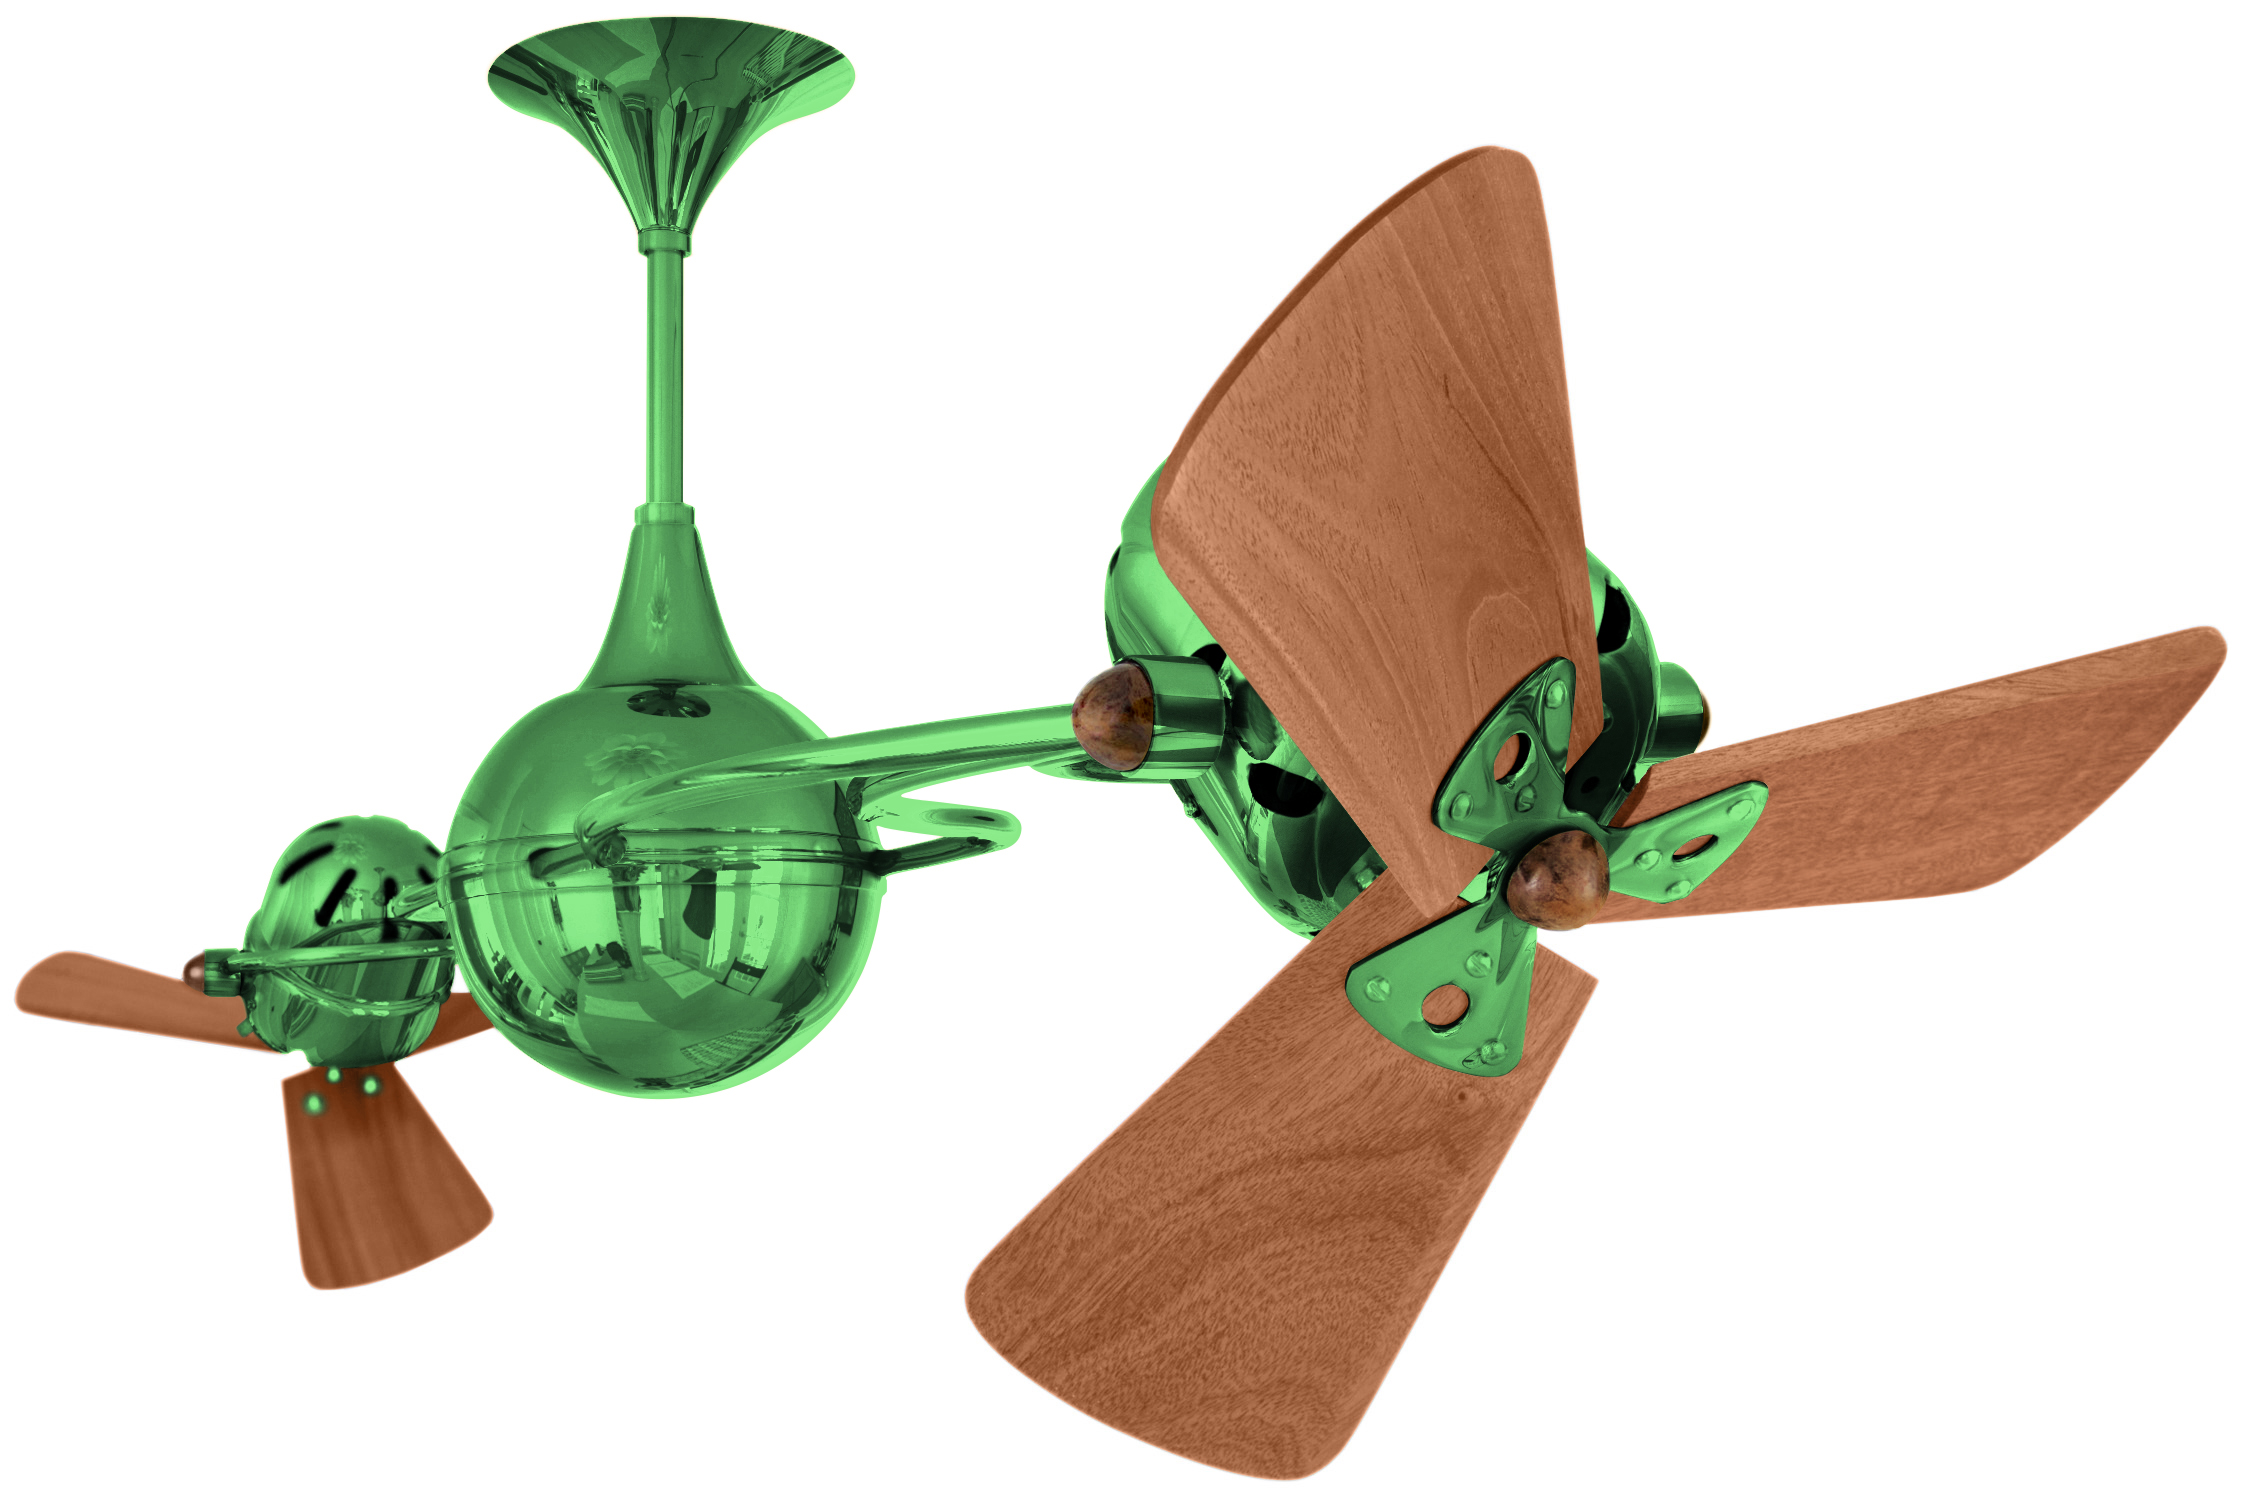 Italo Ventania rotational dual head ceiling fan in Green / Esmeralda finish with solid mahogany wood blades made by Matthews Fan Company.